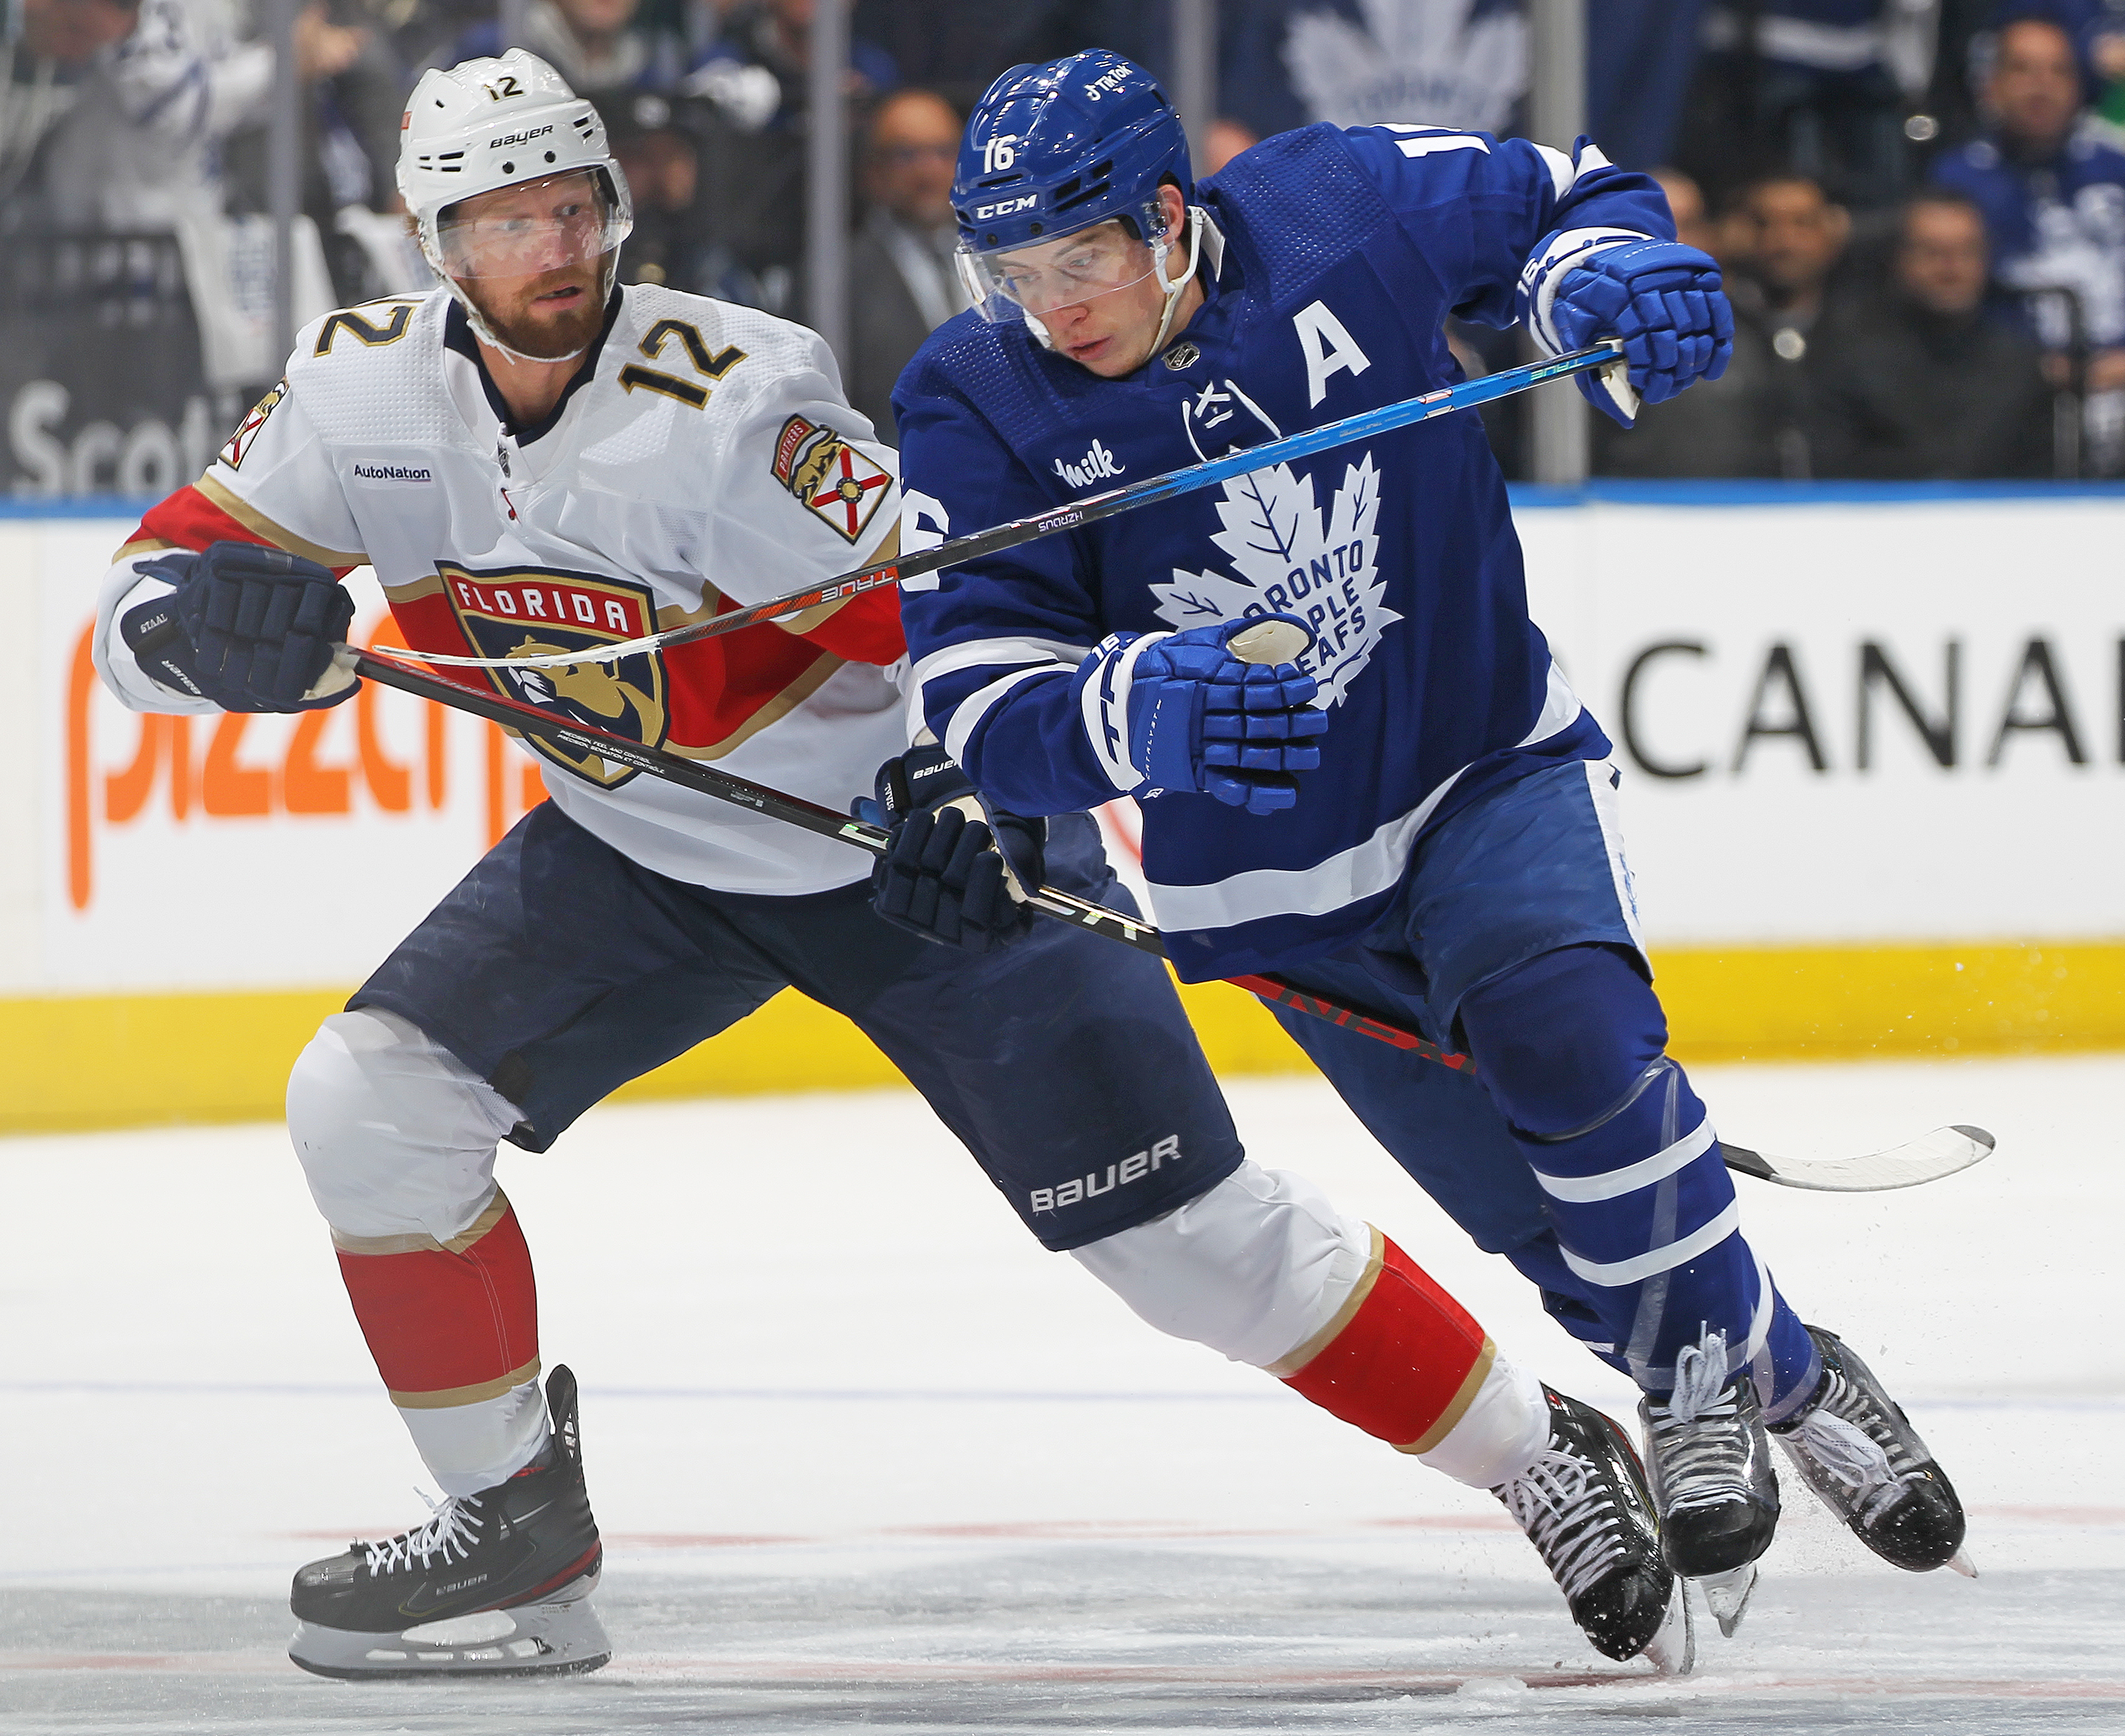 NHL season kicks off in Canada tonight as Maple Leafs host